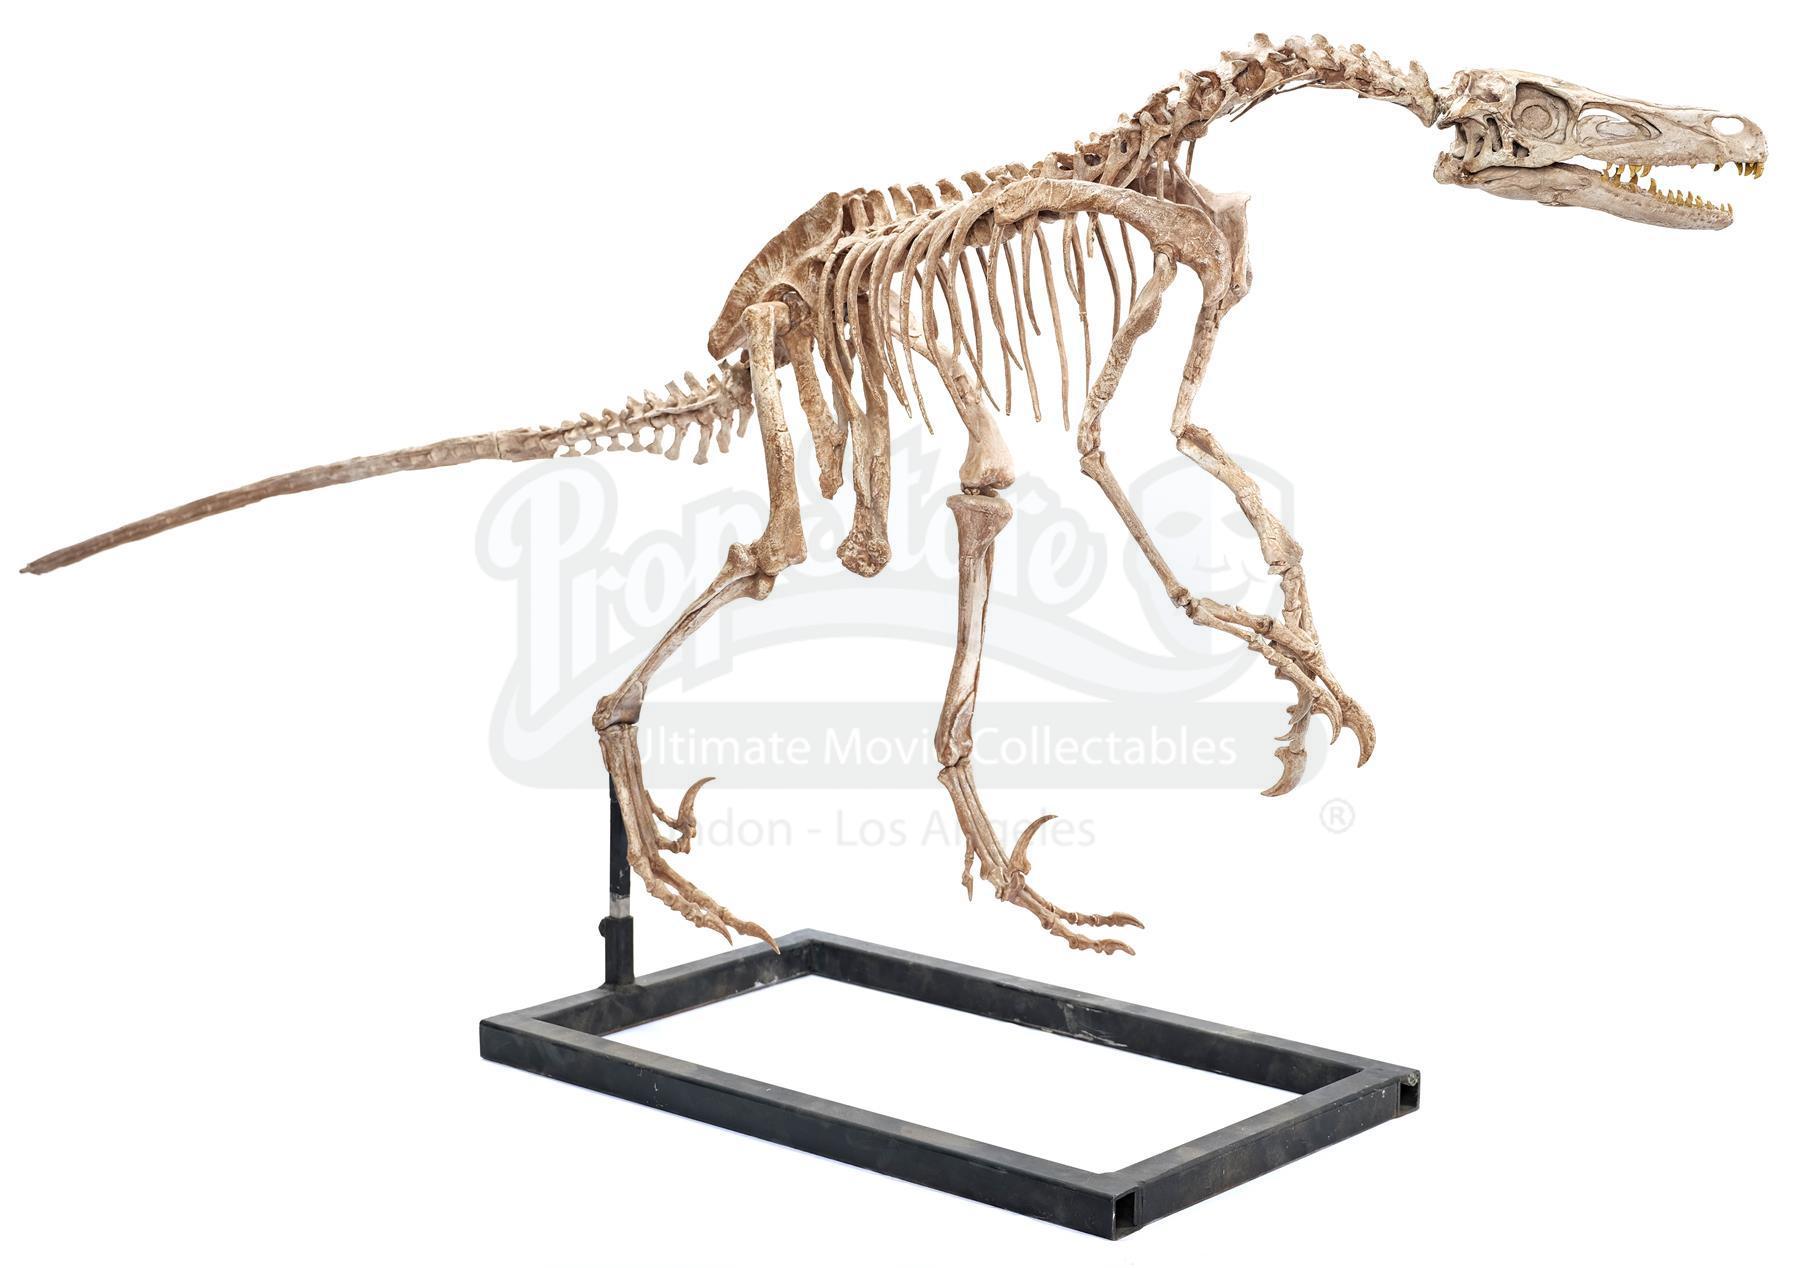 5 foot 9. Velociraptor Skeleton from back. Скелет Велоцираптора фото и рост человека. Emphorosaur-5 (ft.